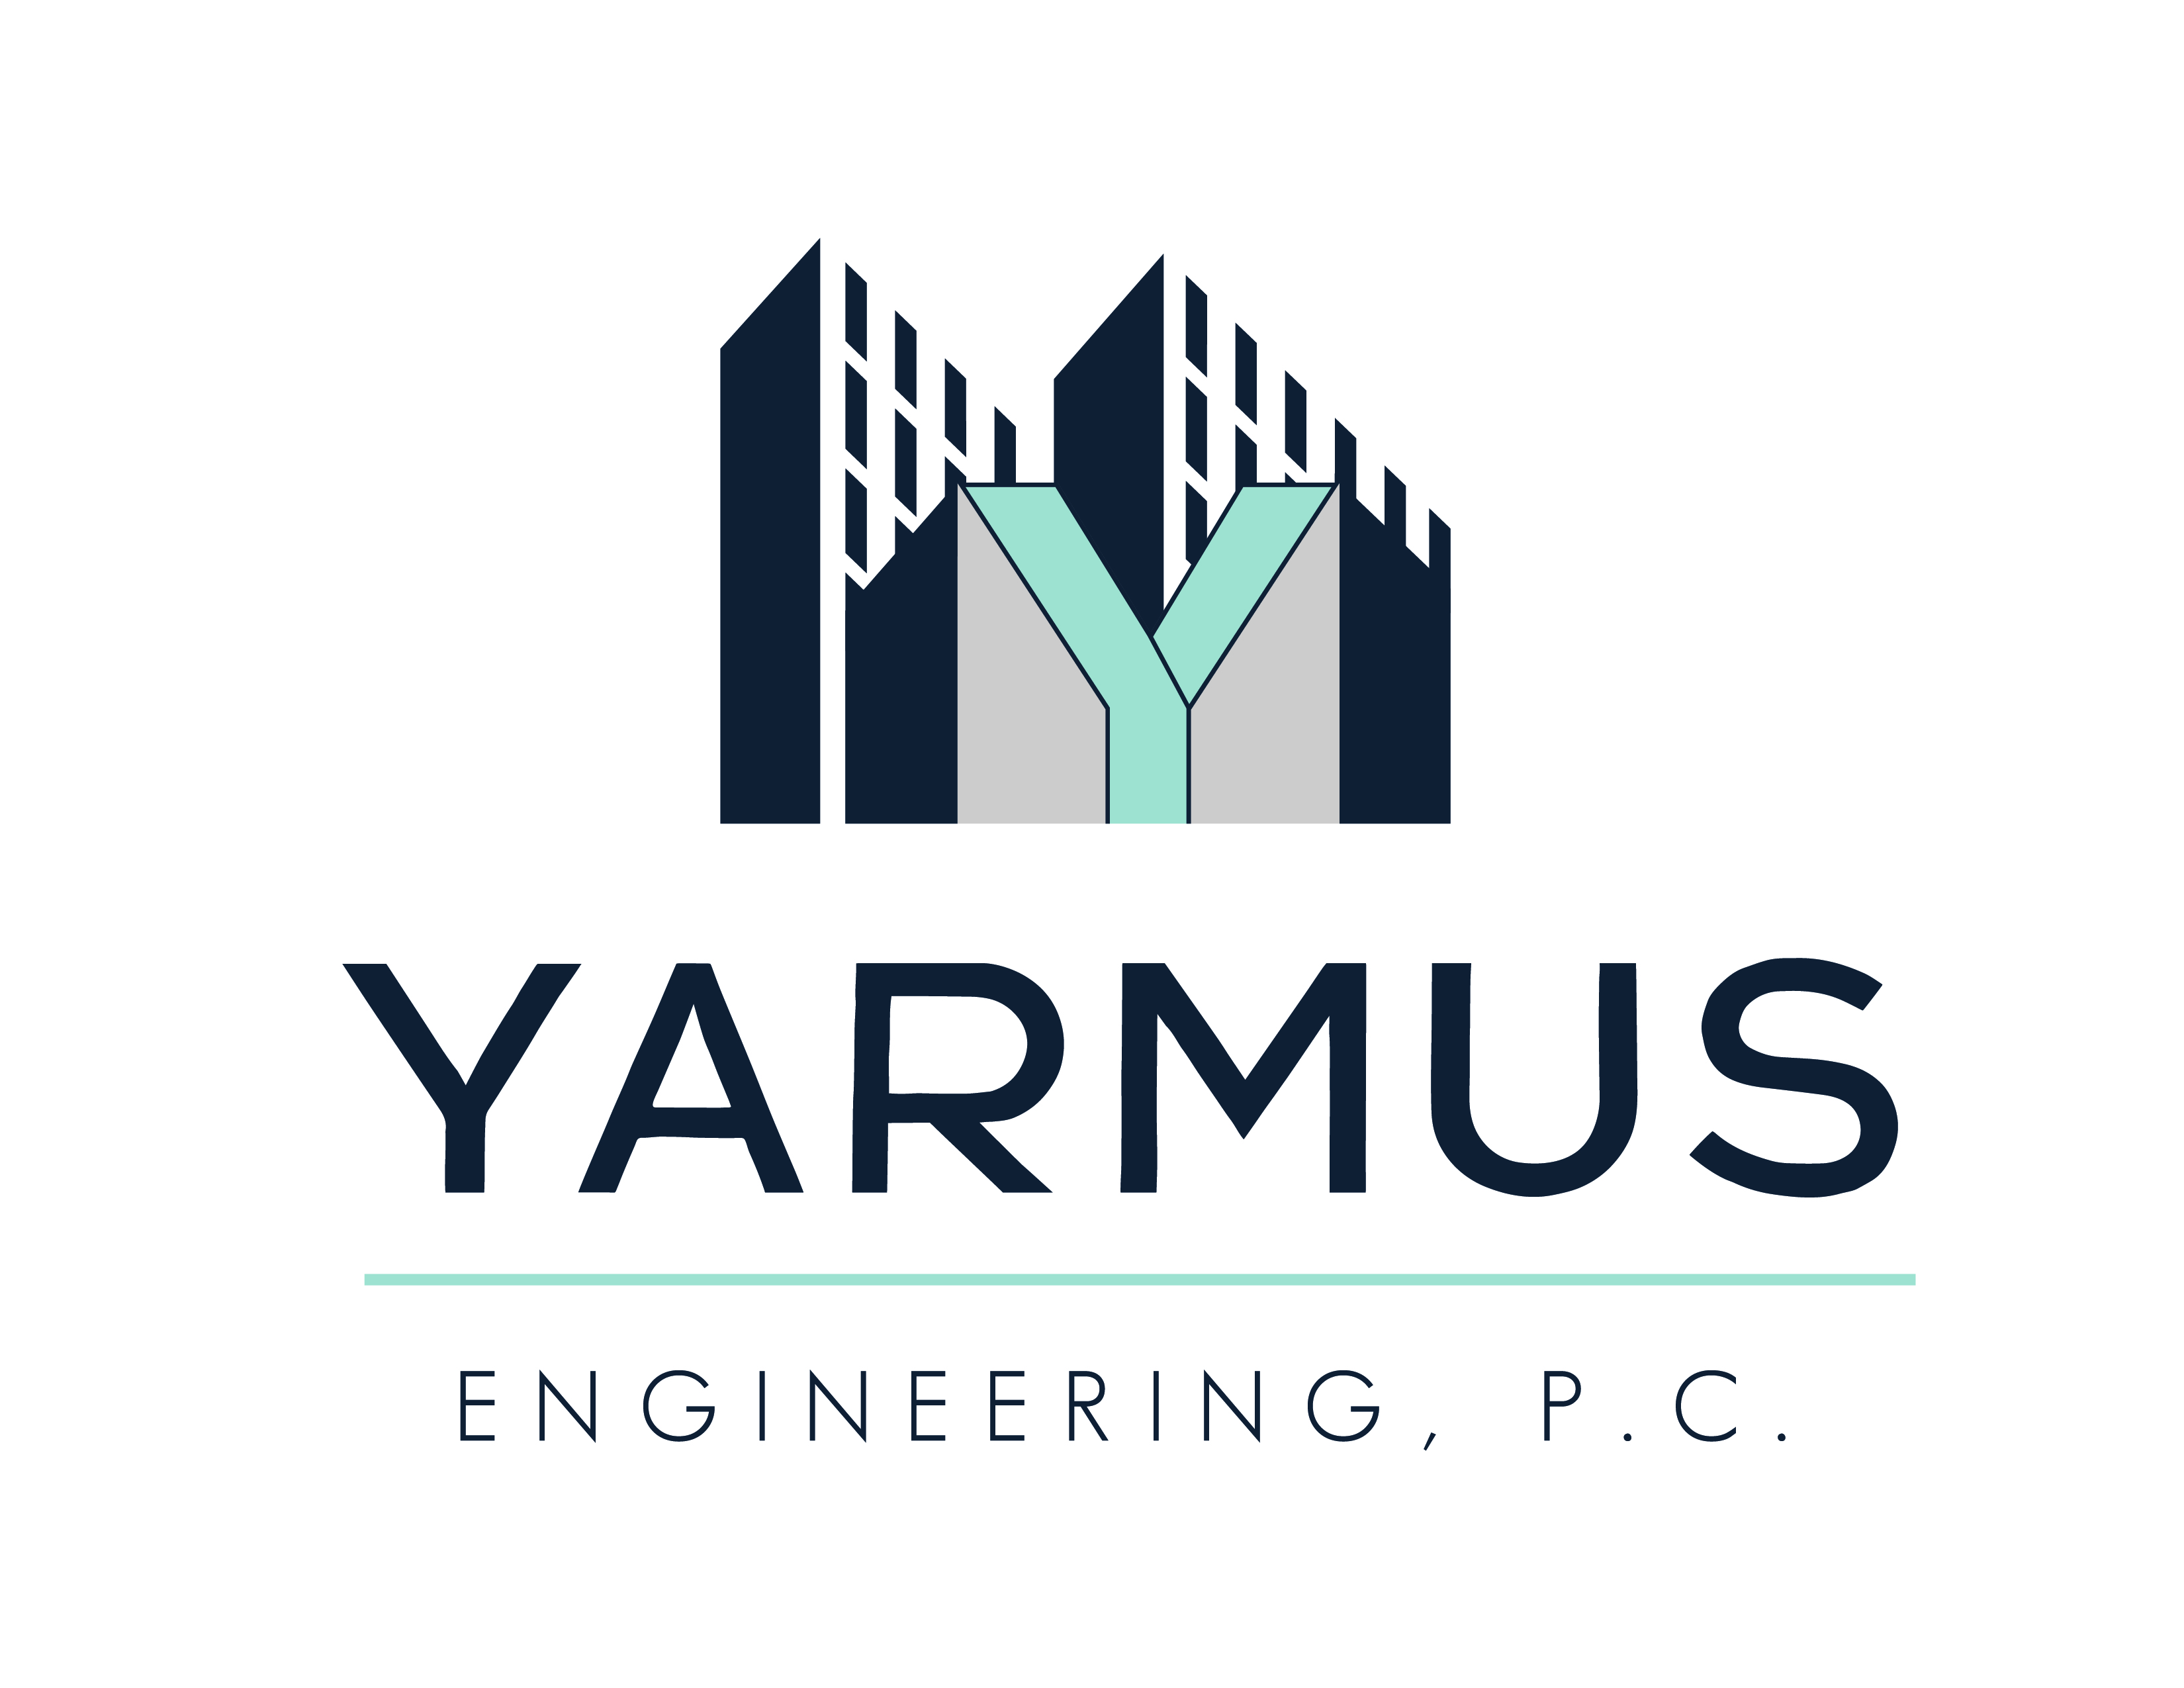 Yarmus Engineering, PC